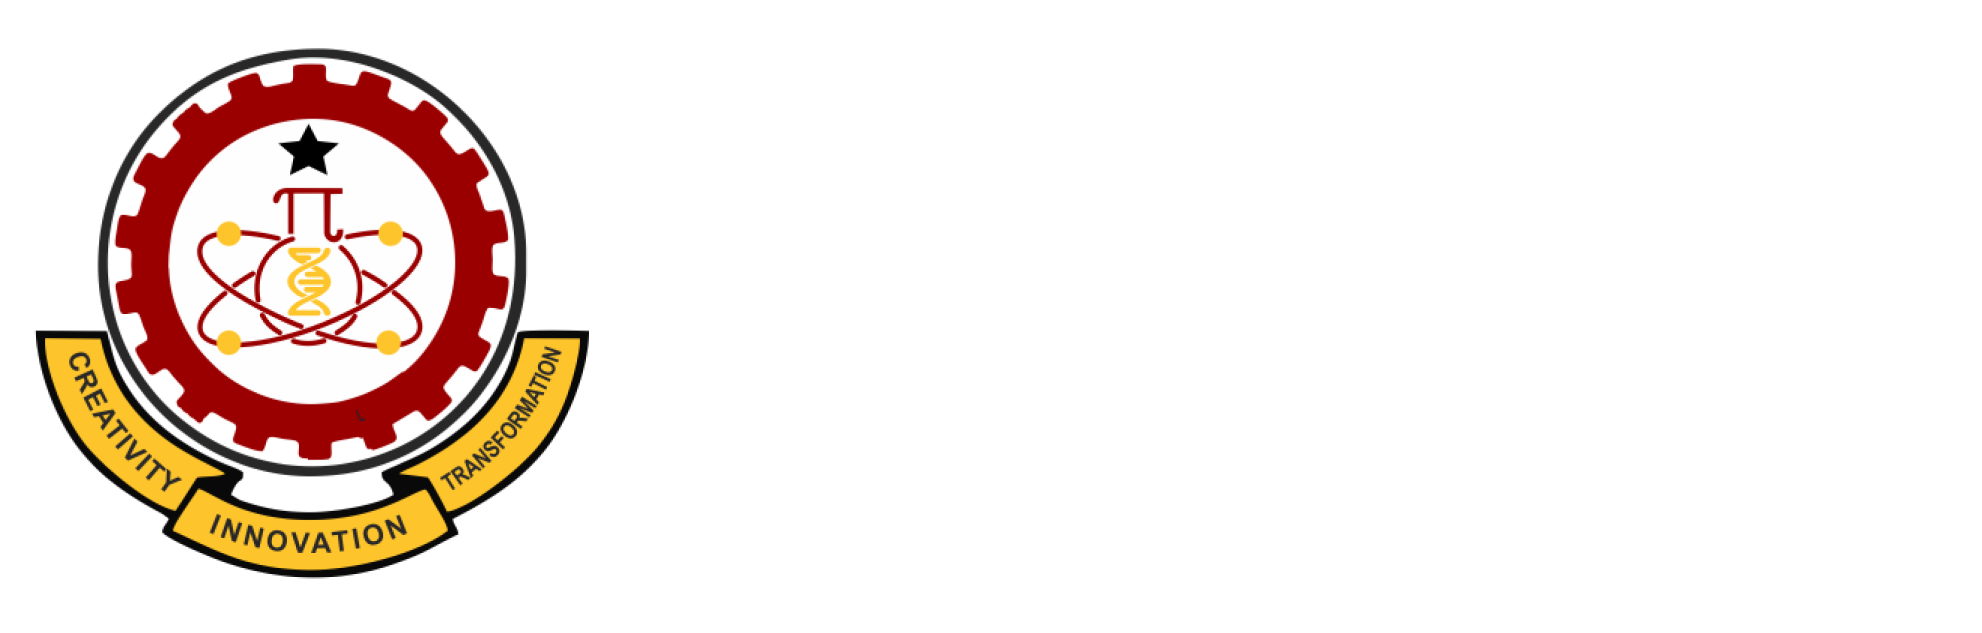 SCHOOL OF MATHEMATICAL SCIENCES